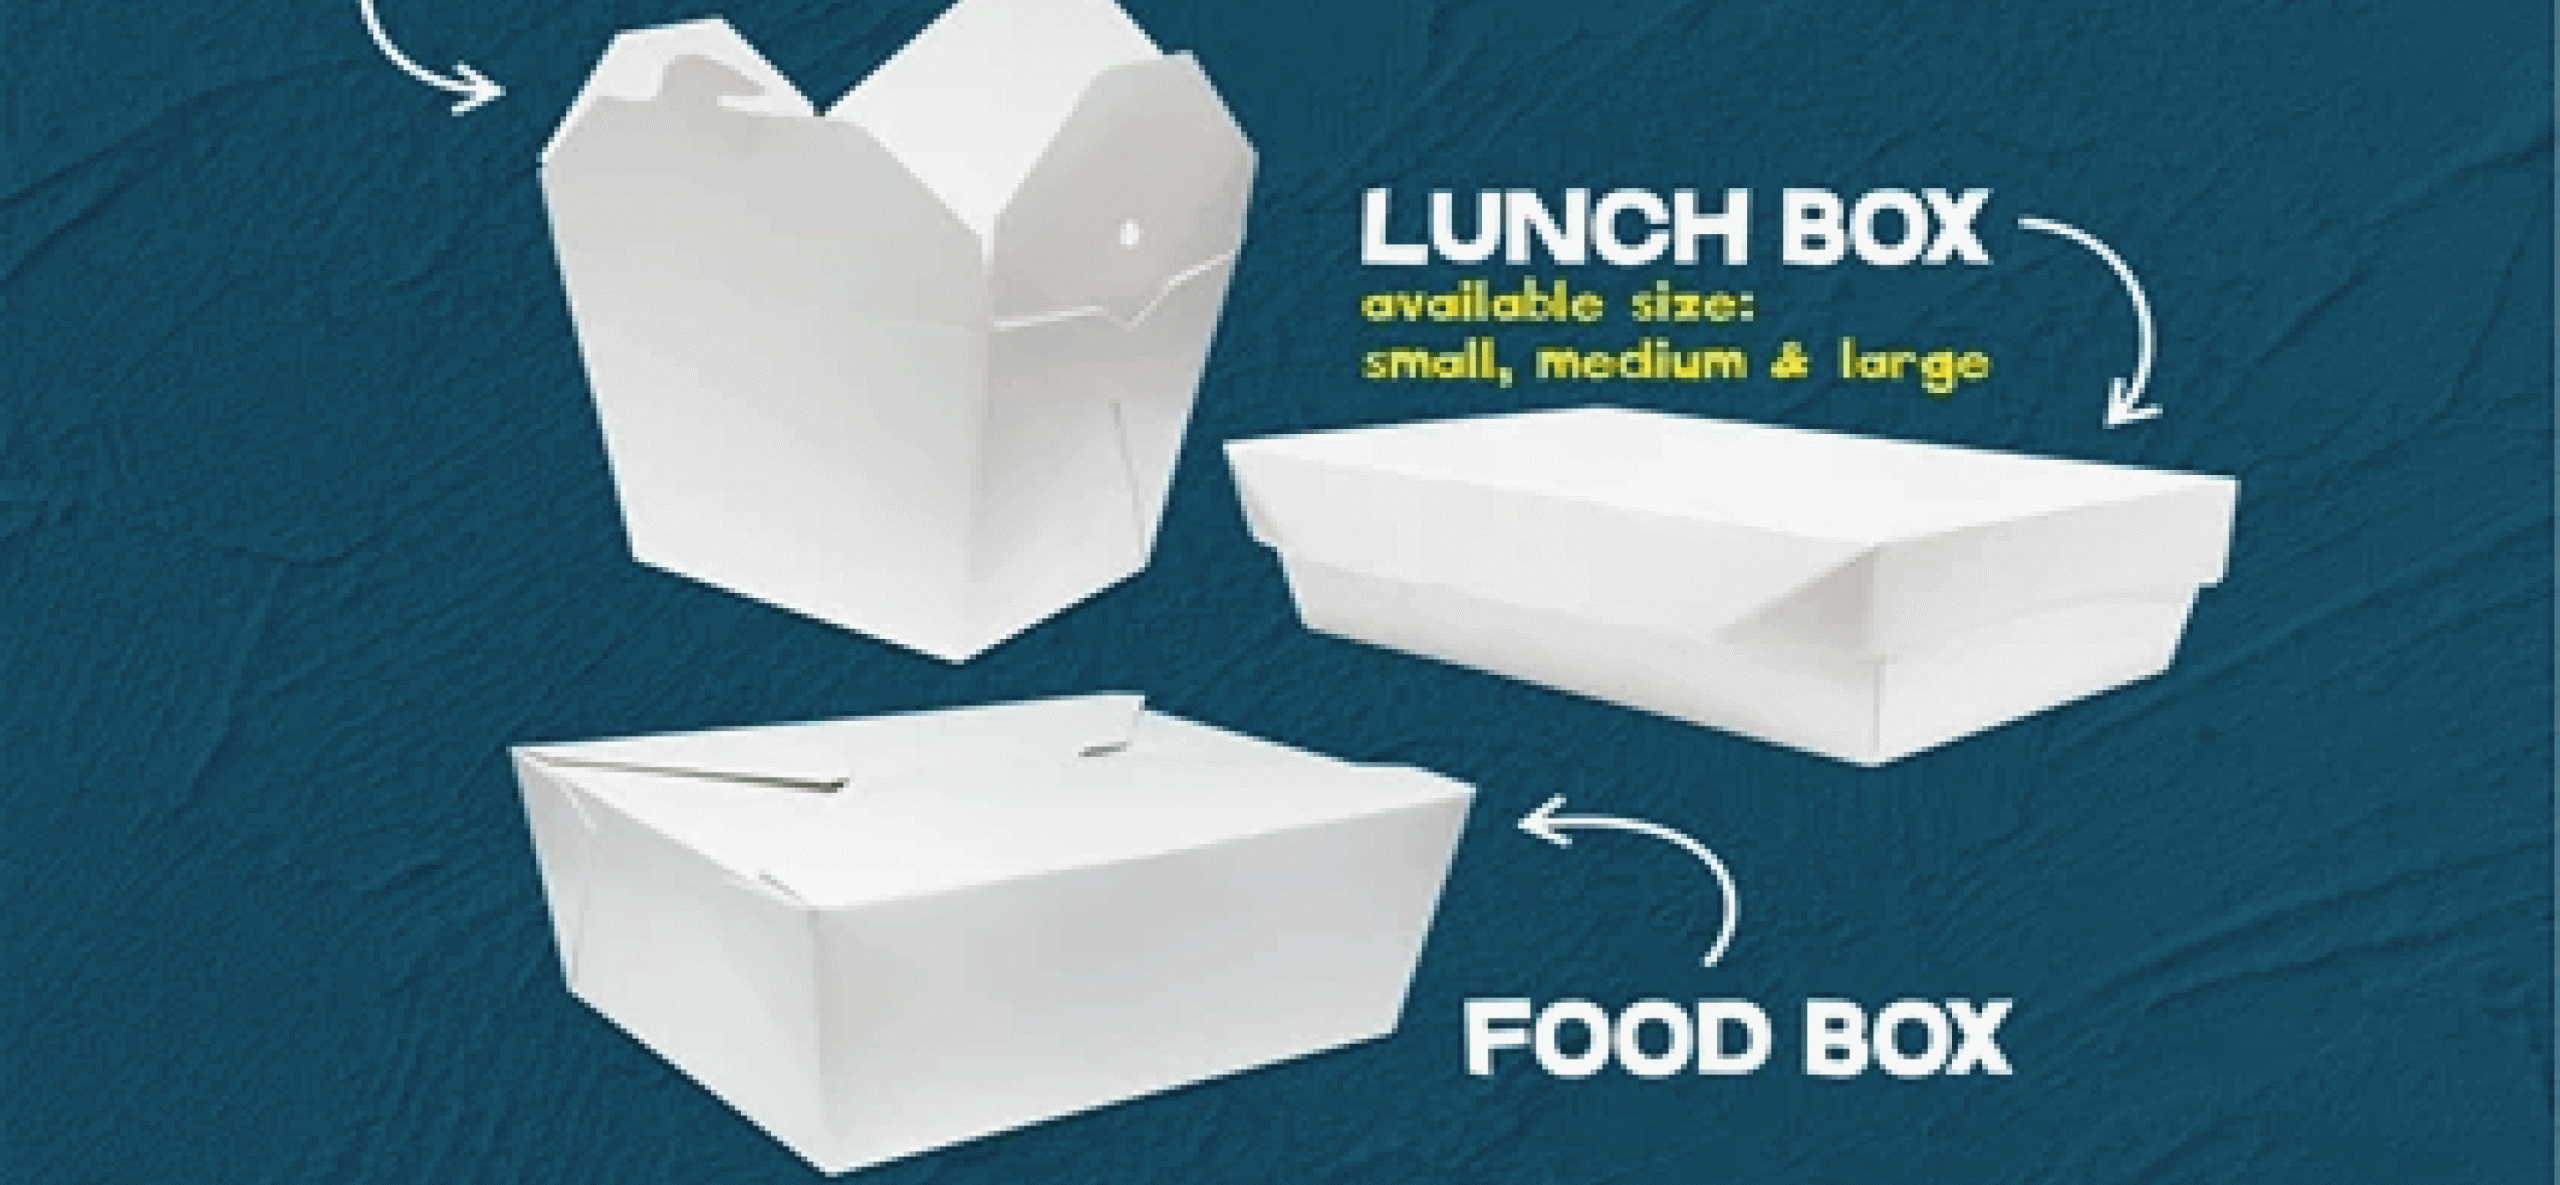 Jenis Jenis Kemasan Lunch Box